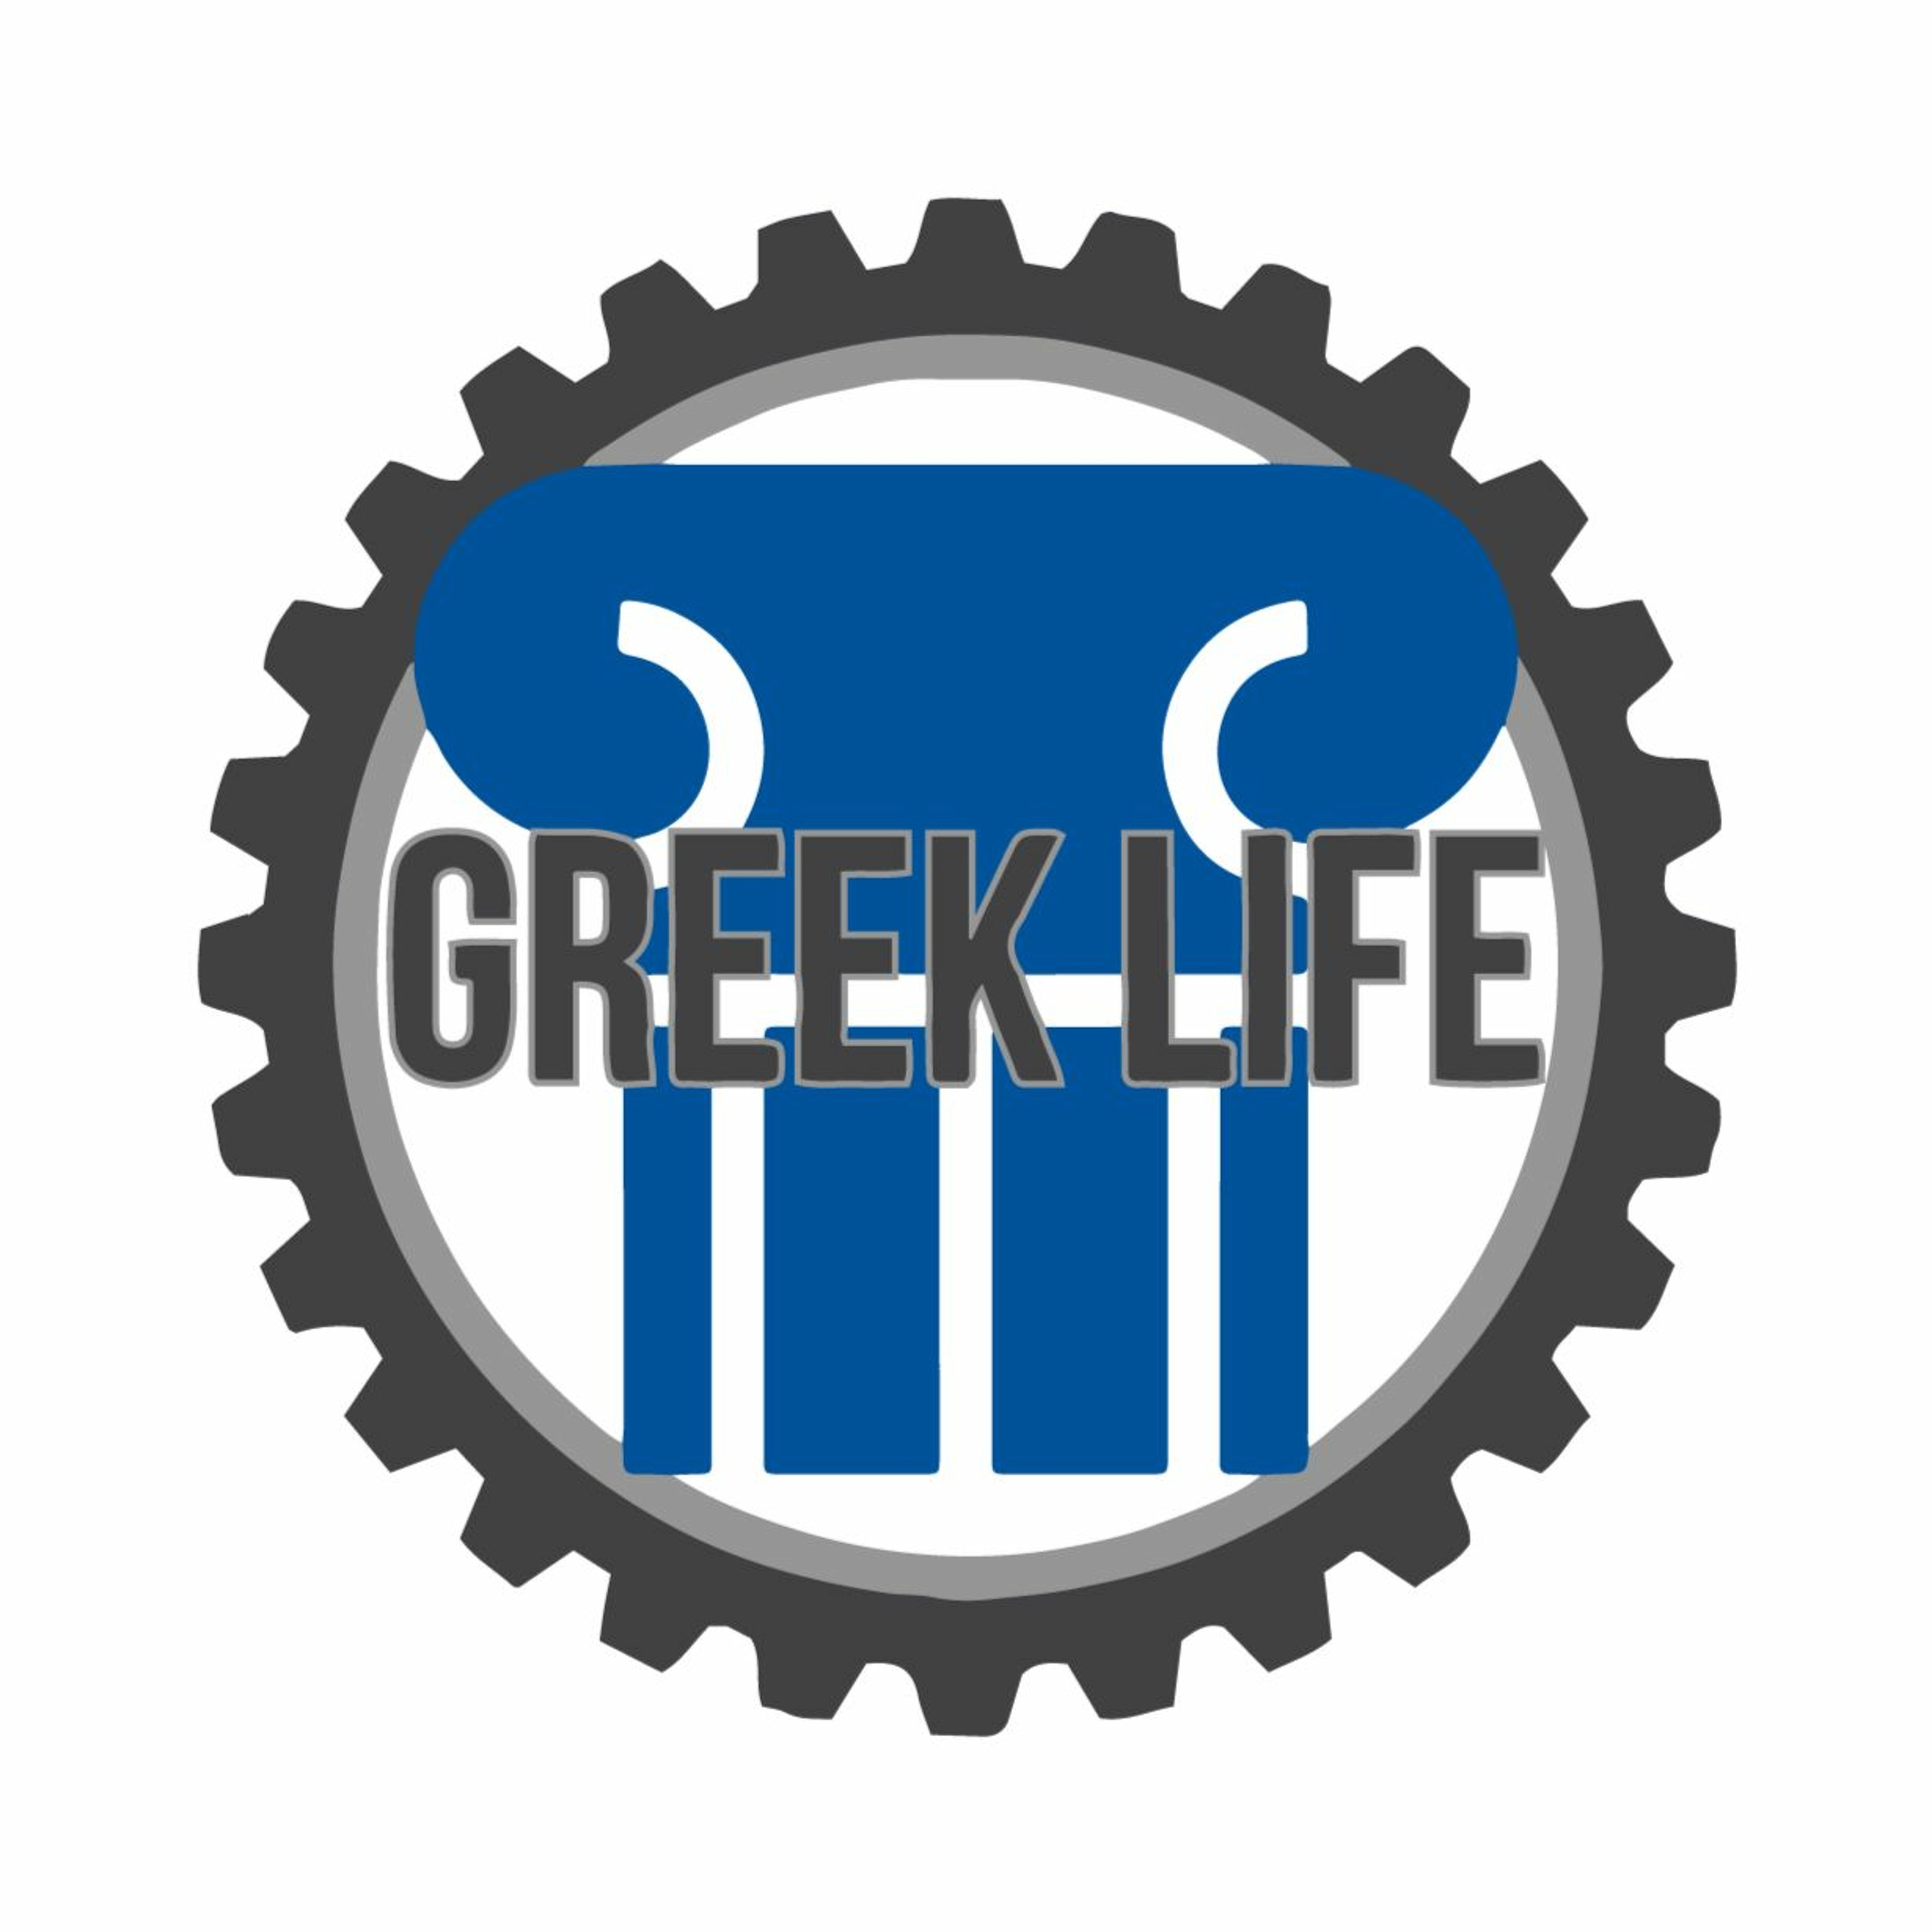 S1E03 - Greek Engineers